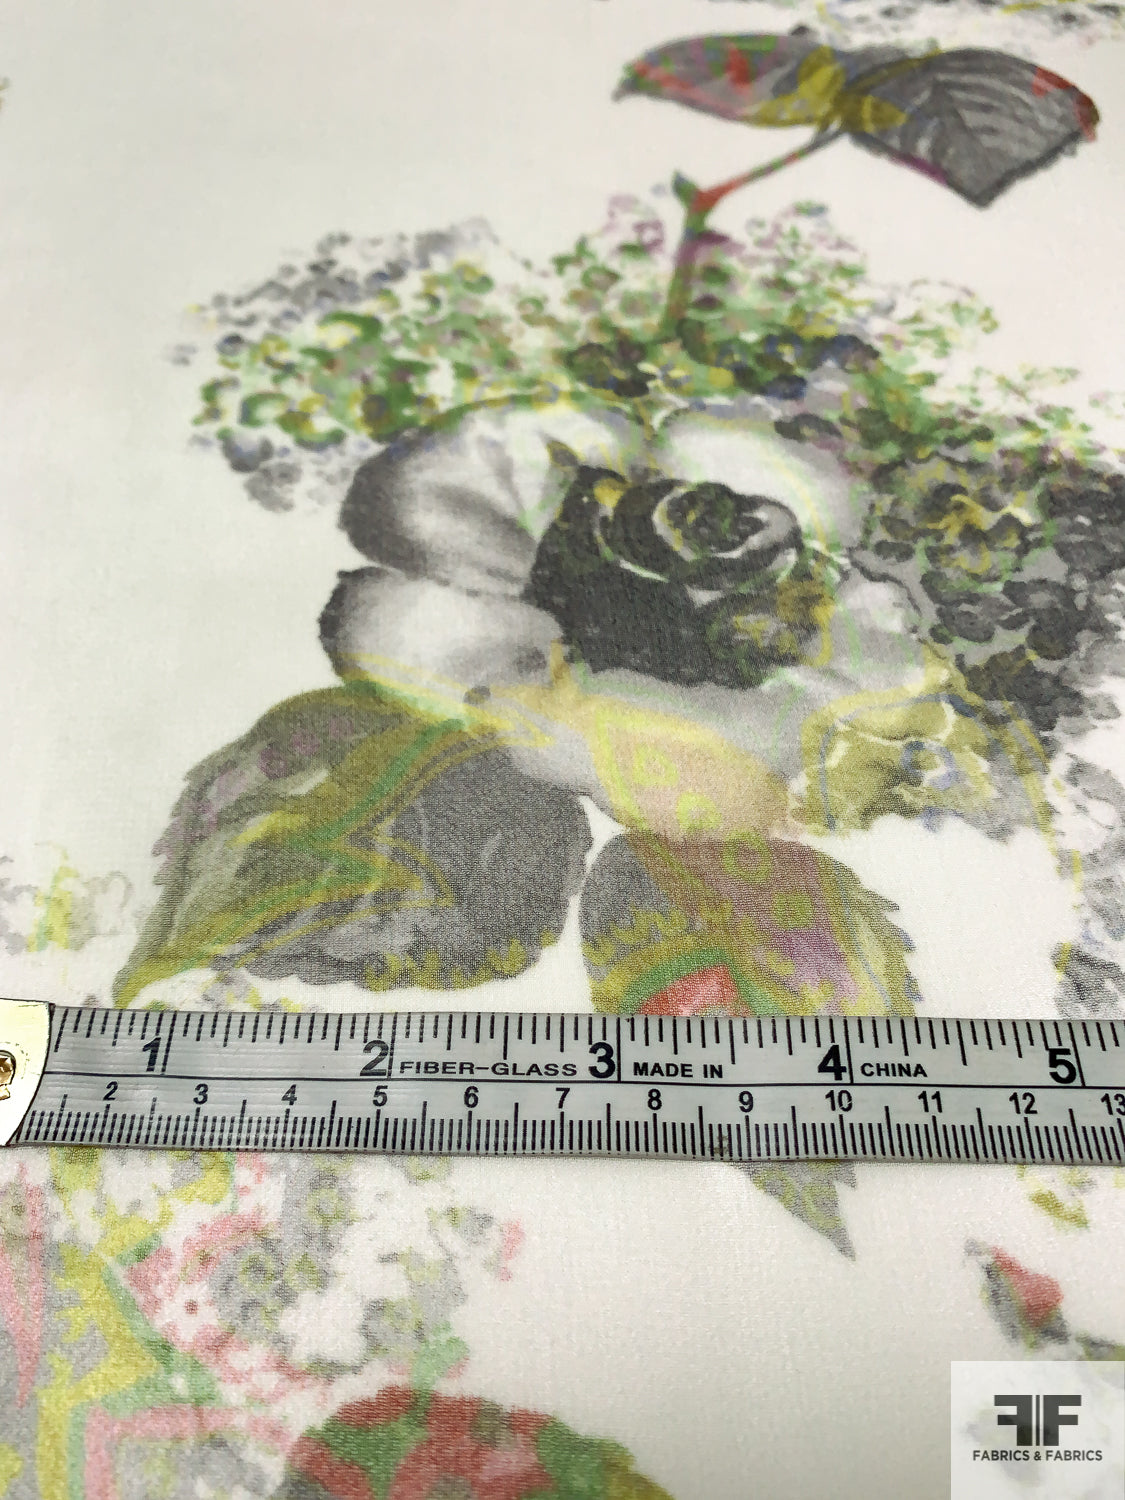 Floral Shrub Printed Silk Chiffon - Shades of Grey / Greens / Off-White